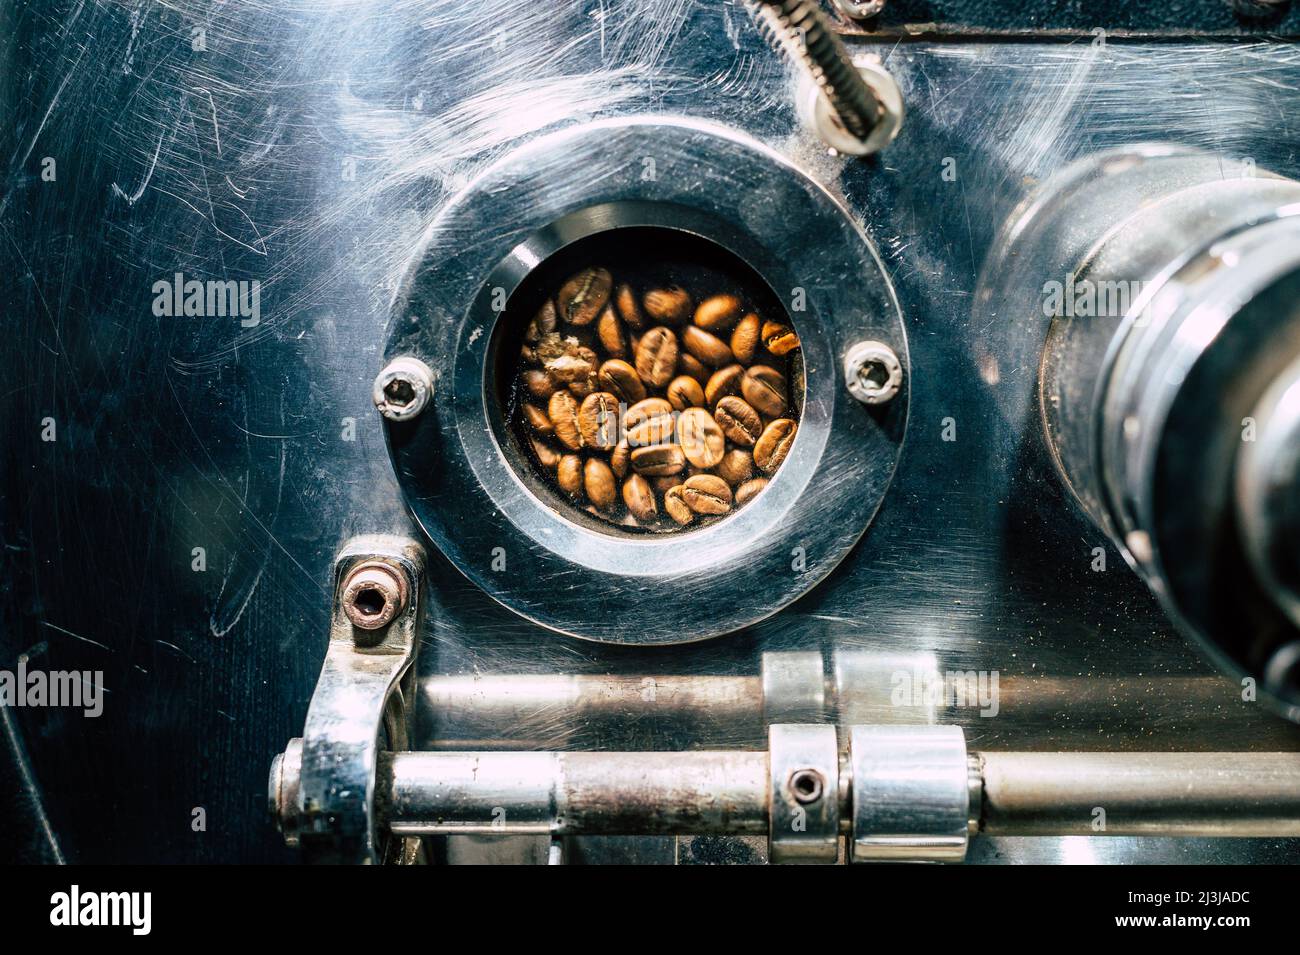 Los granos de café giran en una máquina para asar granos de café Foto de stock